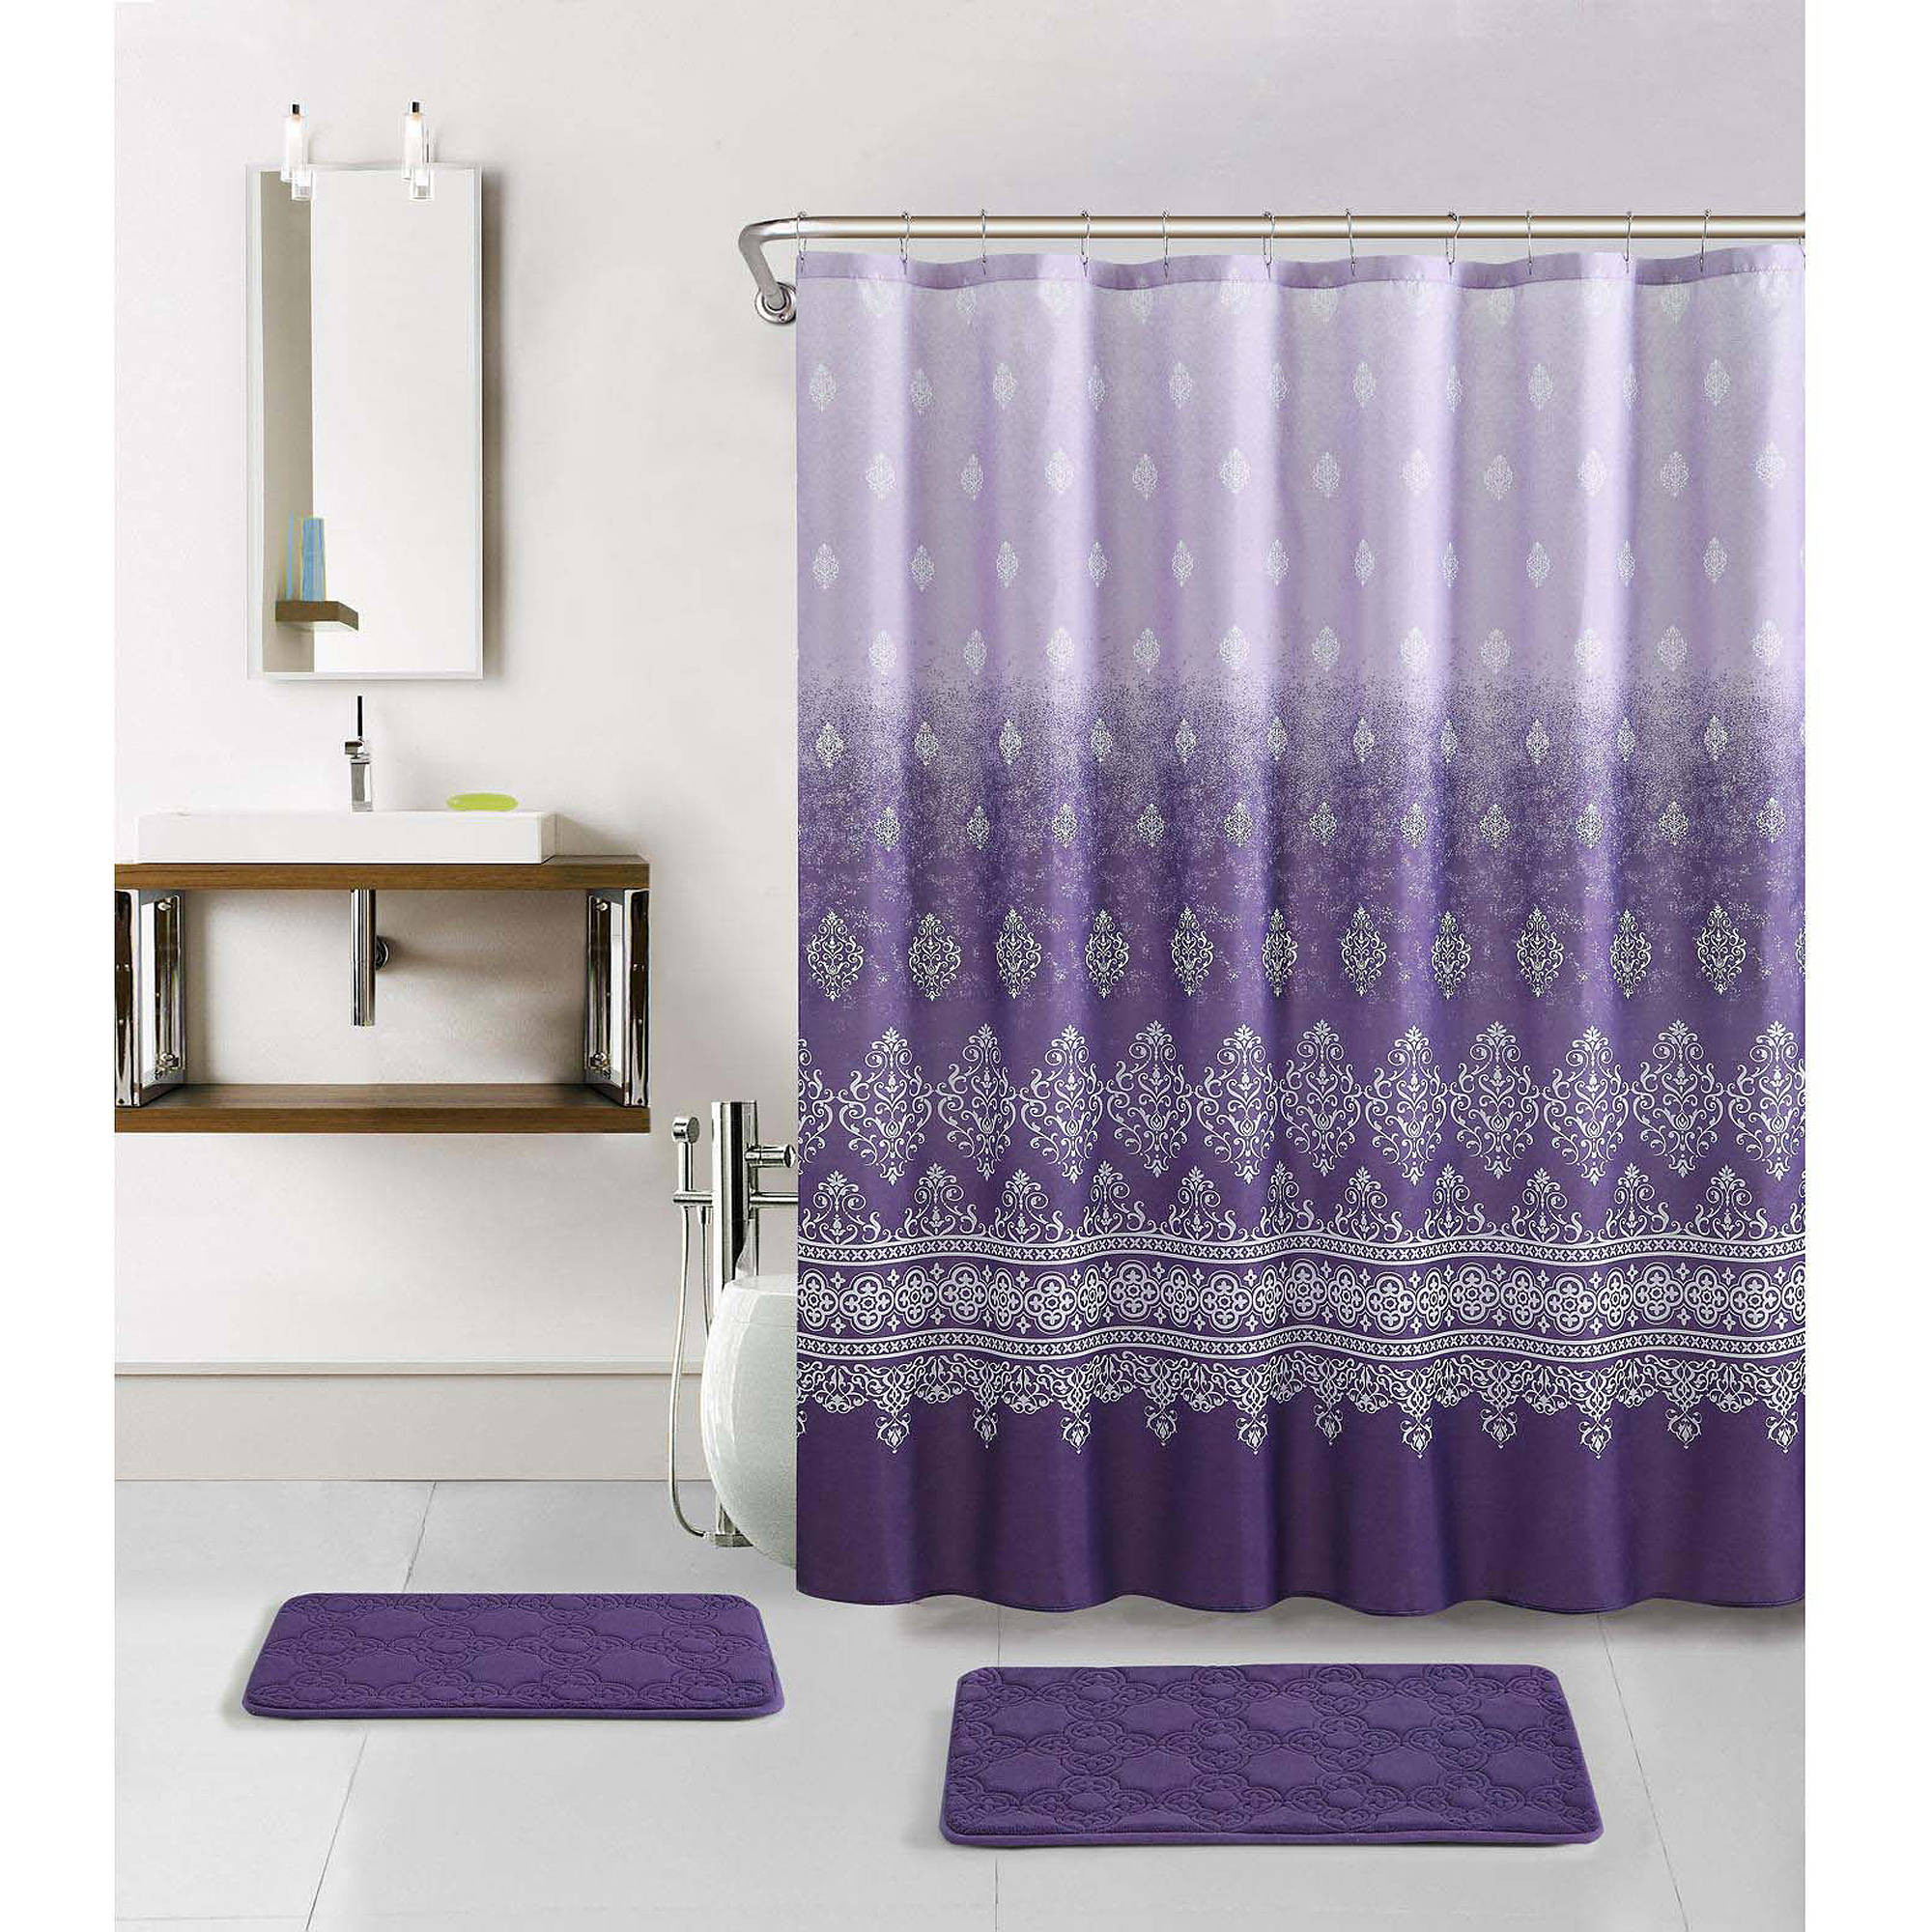 Bathroom Sets With Shower Curtain
 Bathroom Wondrous Shower Curtain Walmart With Alluring